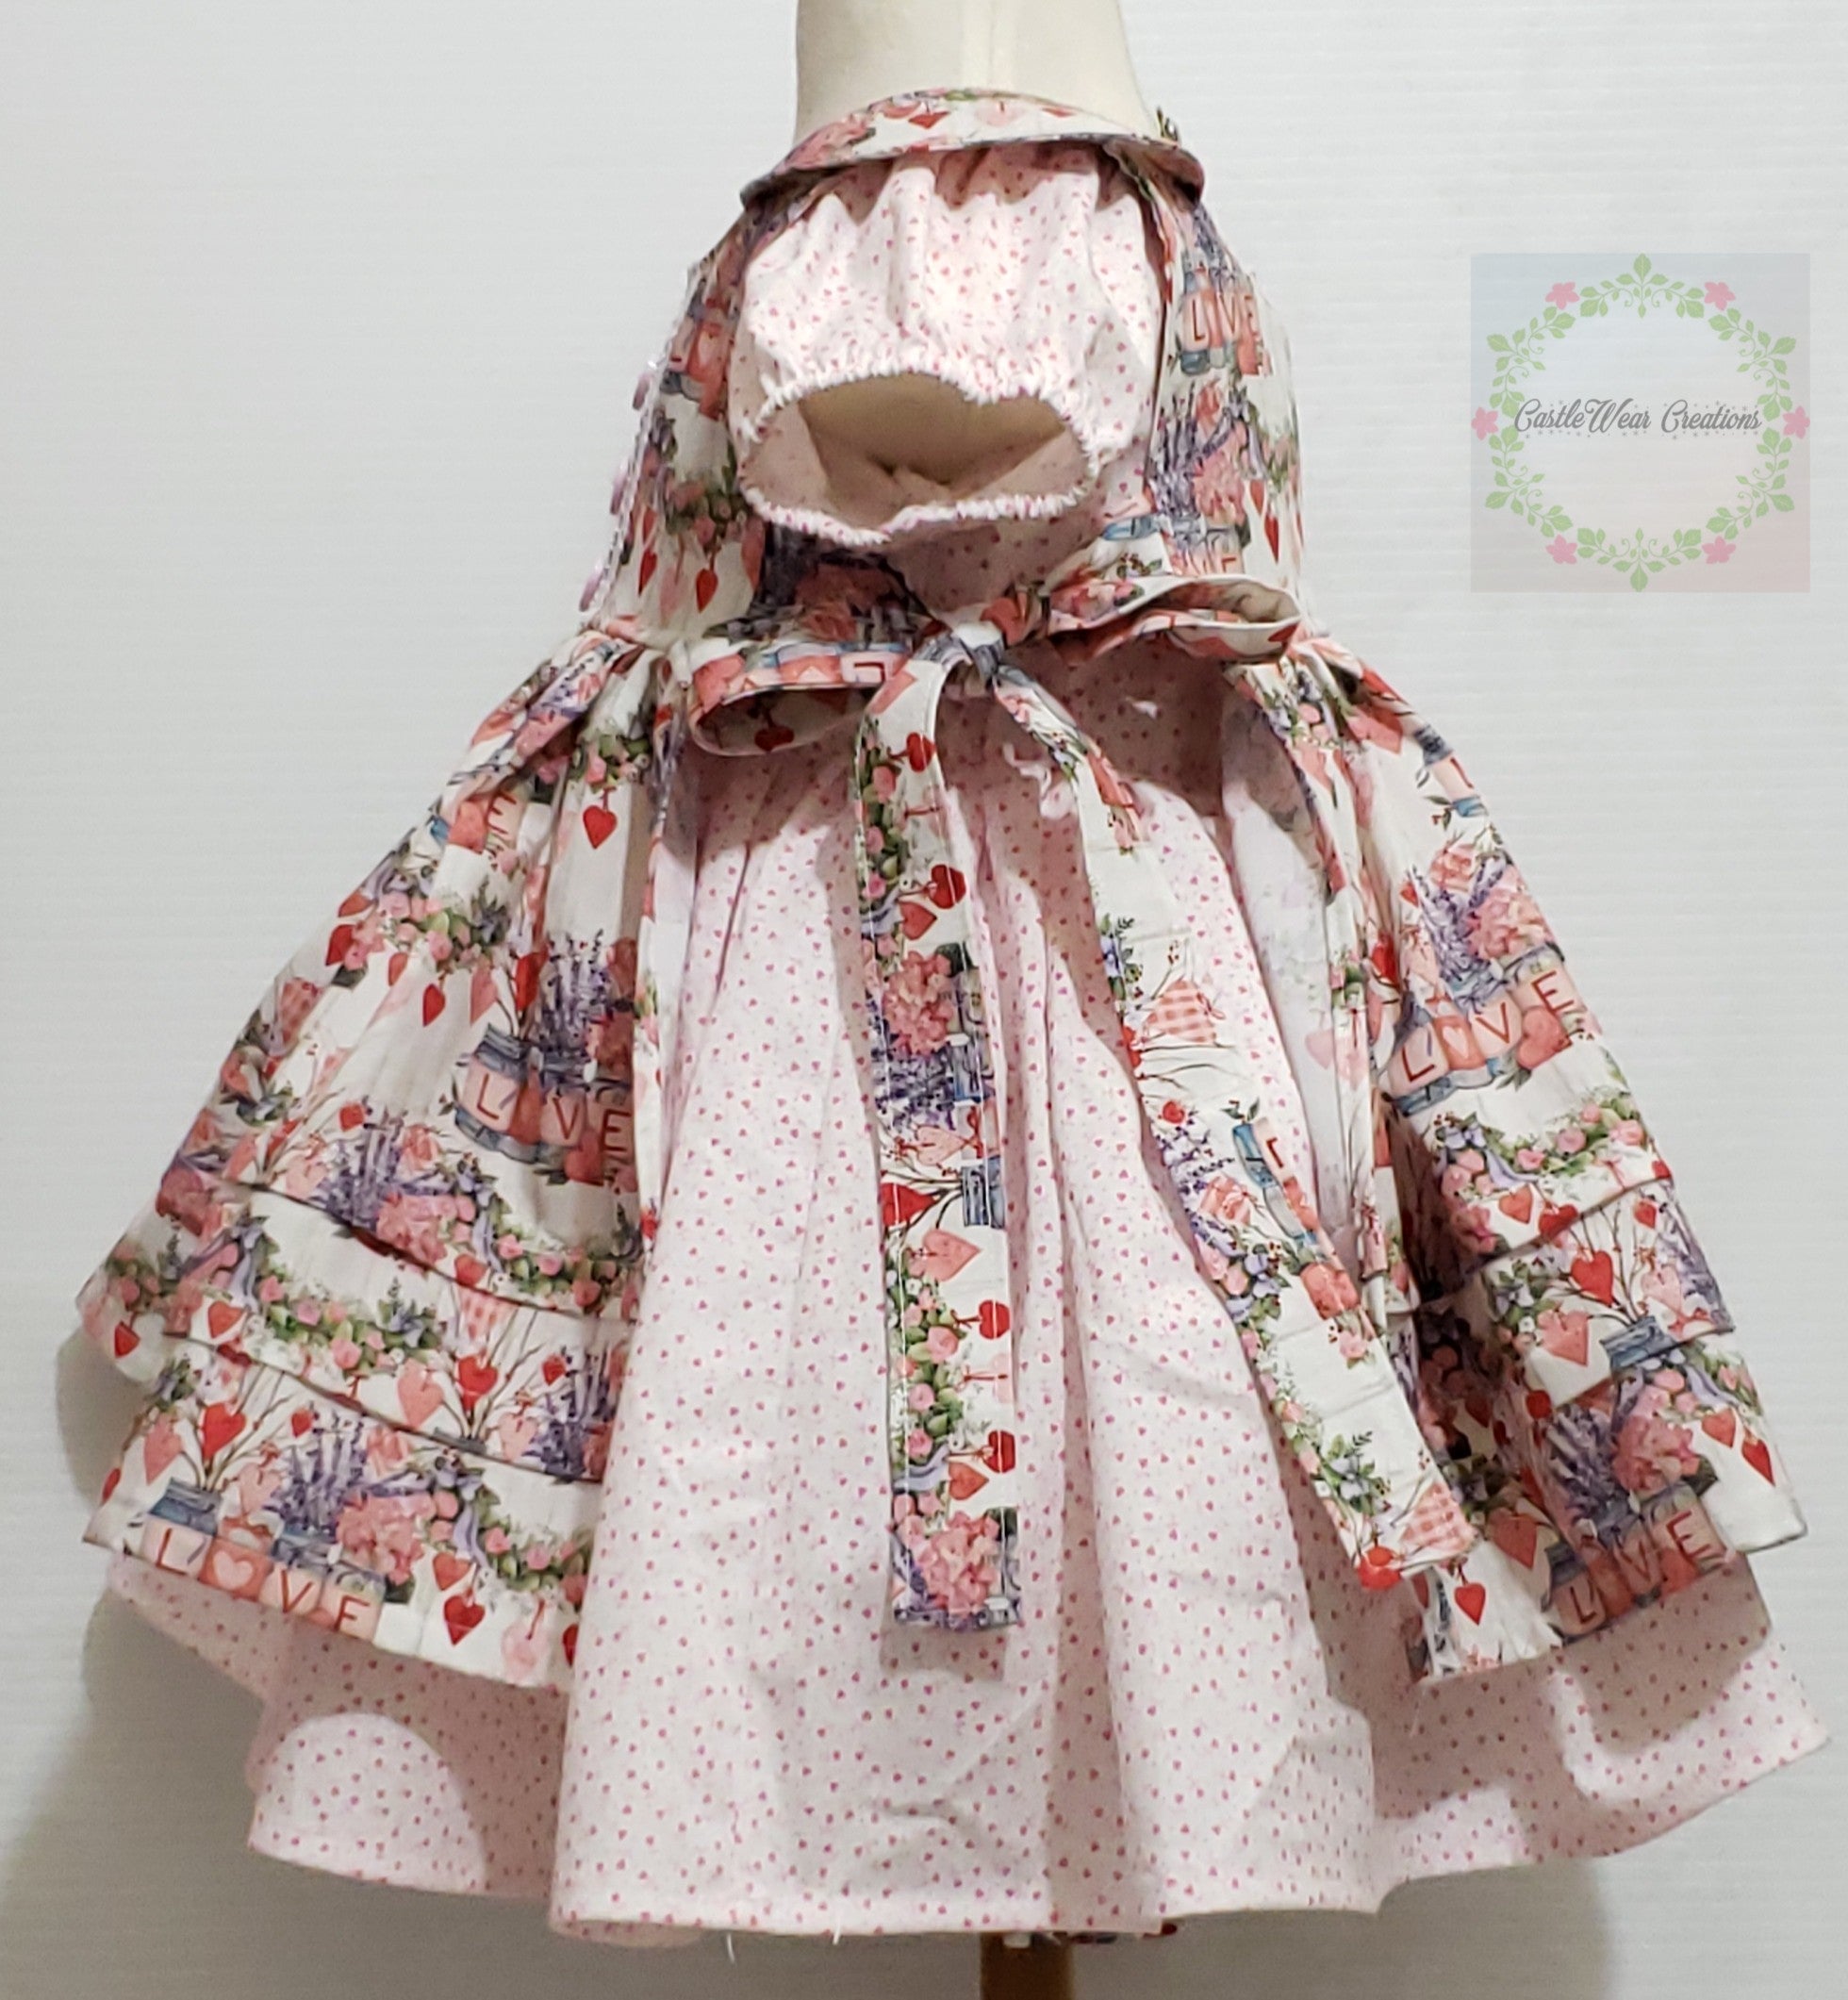 Oh So Sweet Infant Dress Set